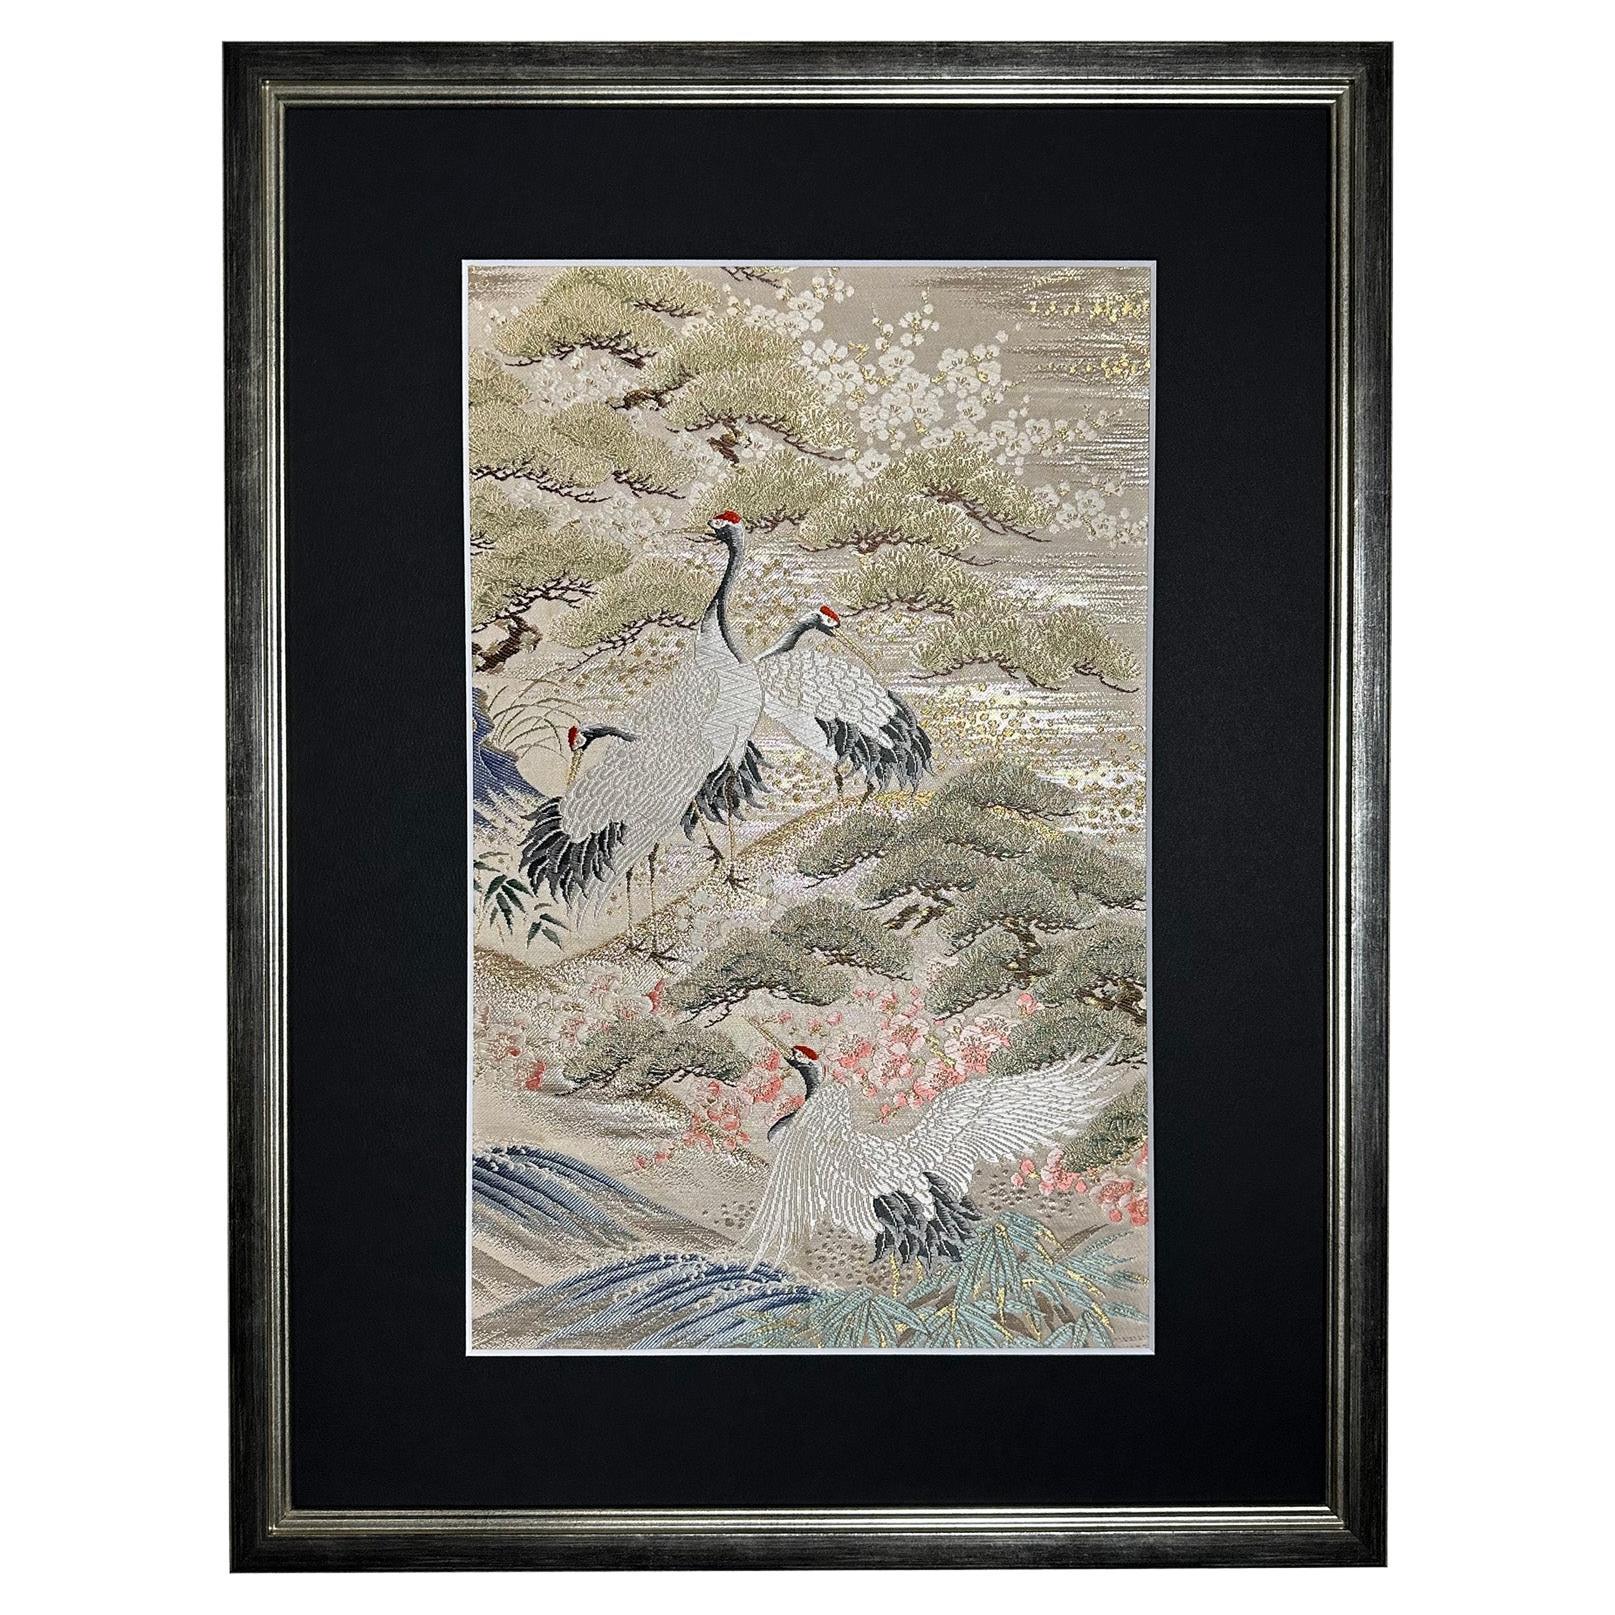 Framed Kimono Art, "The Crane's Departure" by Kimono-Couture, Japanese Wall Art